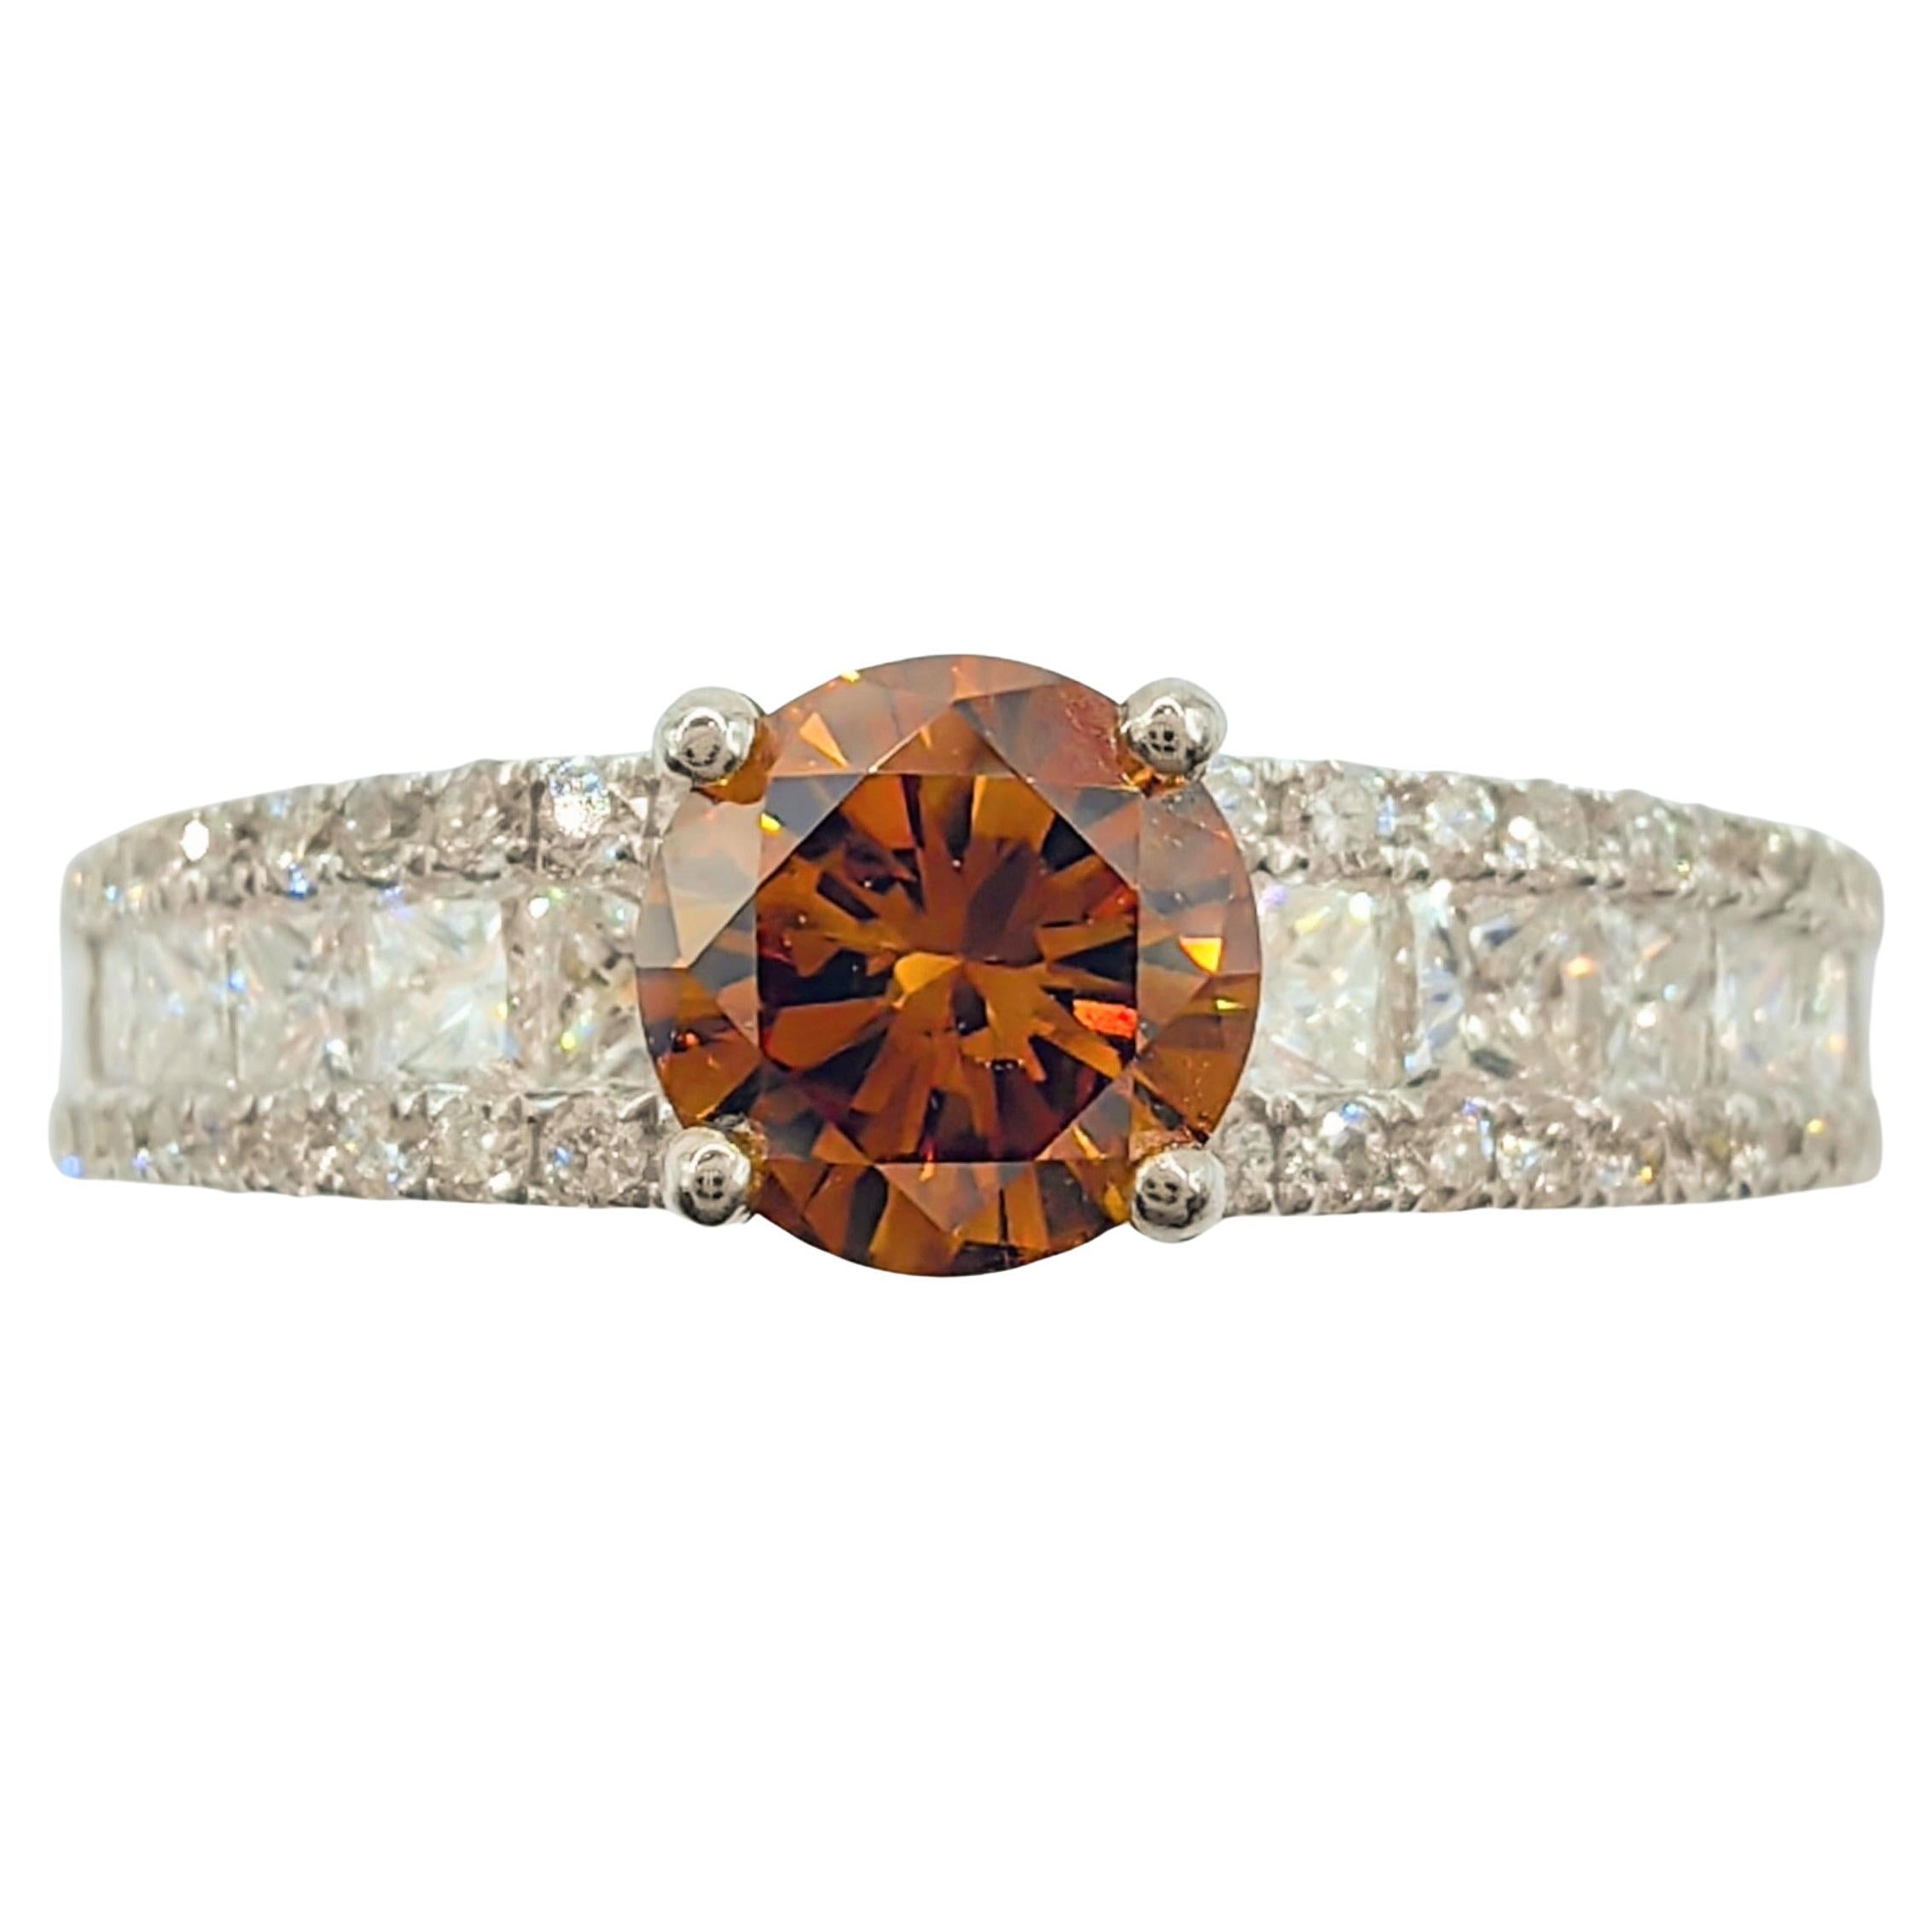 GIA Certified .51 Carat Fancy Deep Orange-Brown Diamond Ring in 18K White Gold For Sale